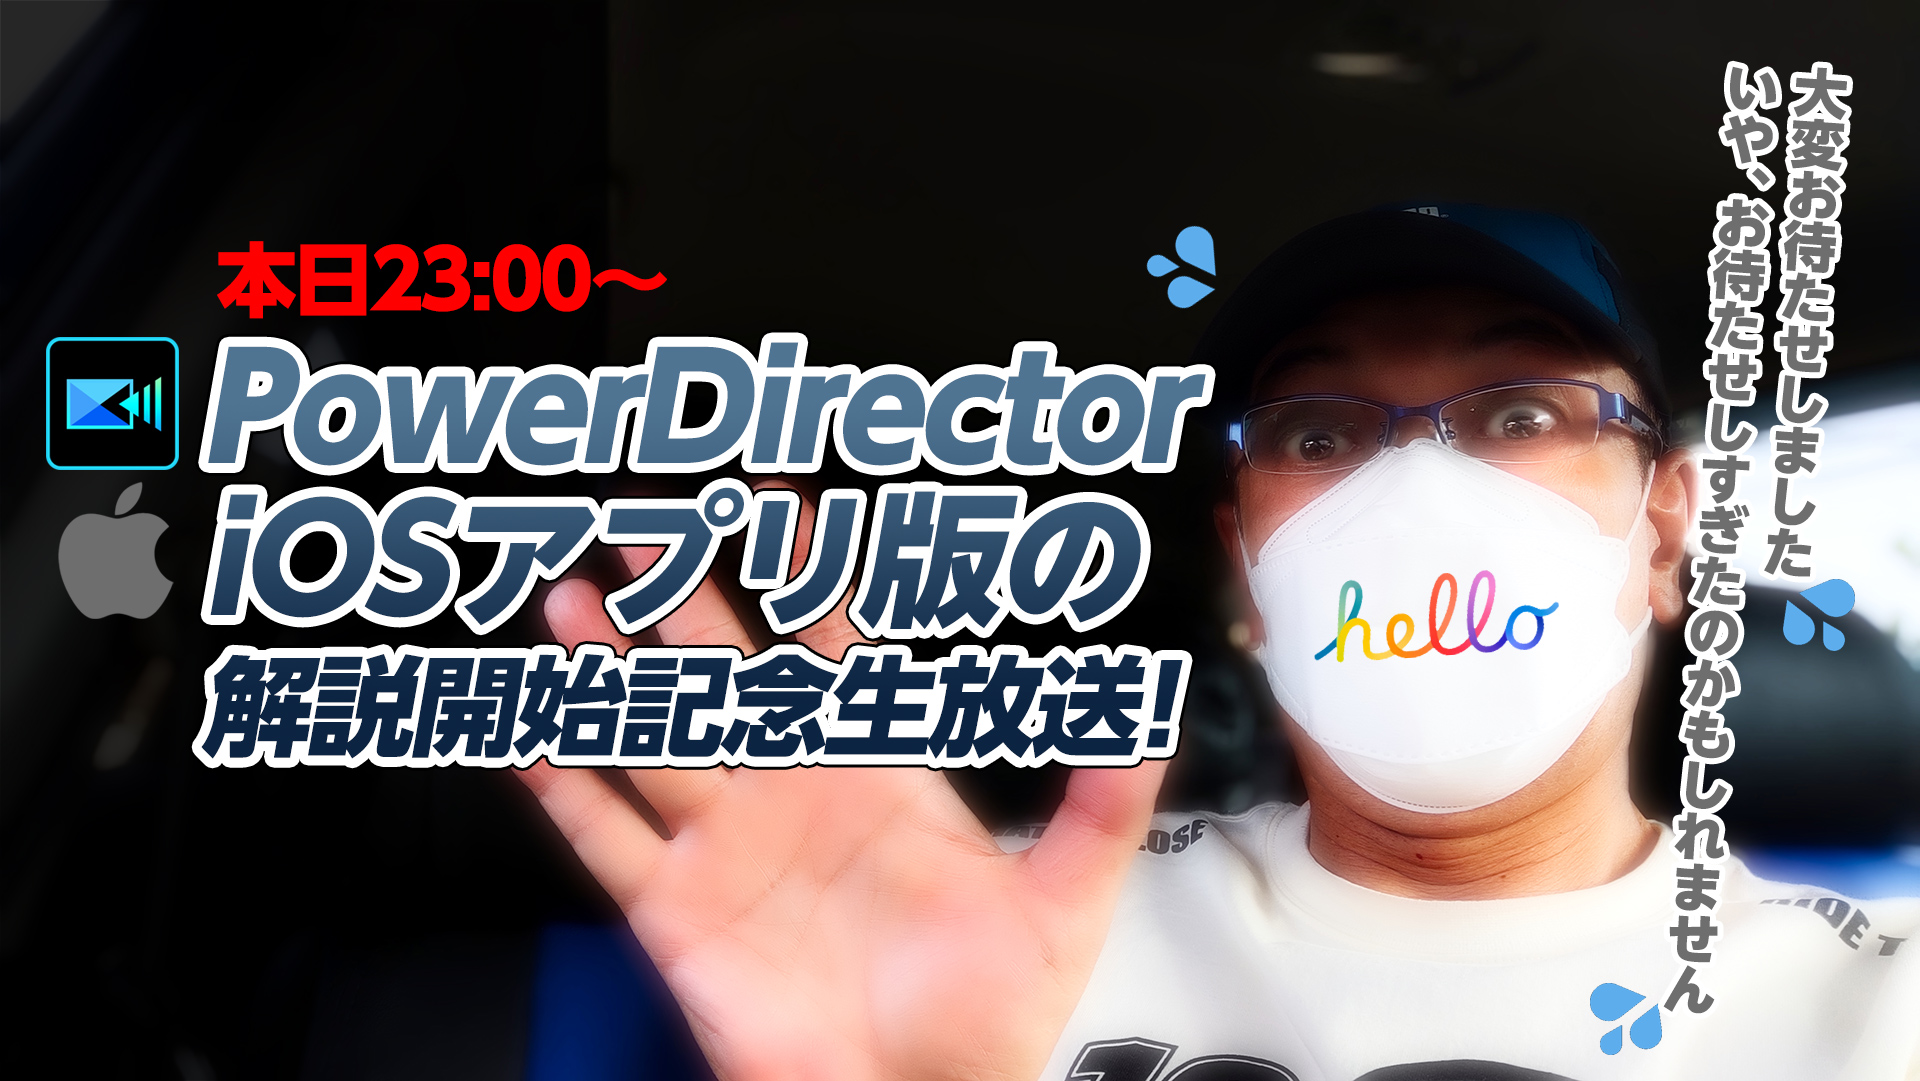 PowerDirector iOS・Android 版アプリの解説開始記念生放送!